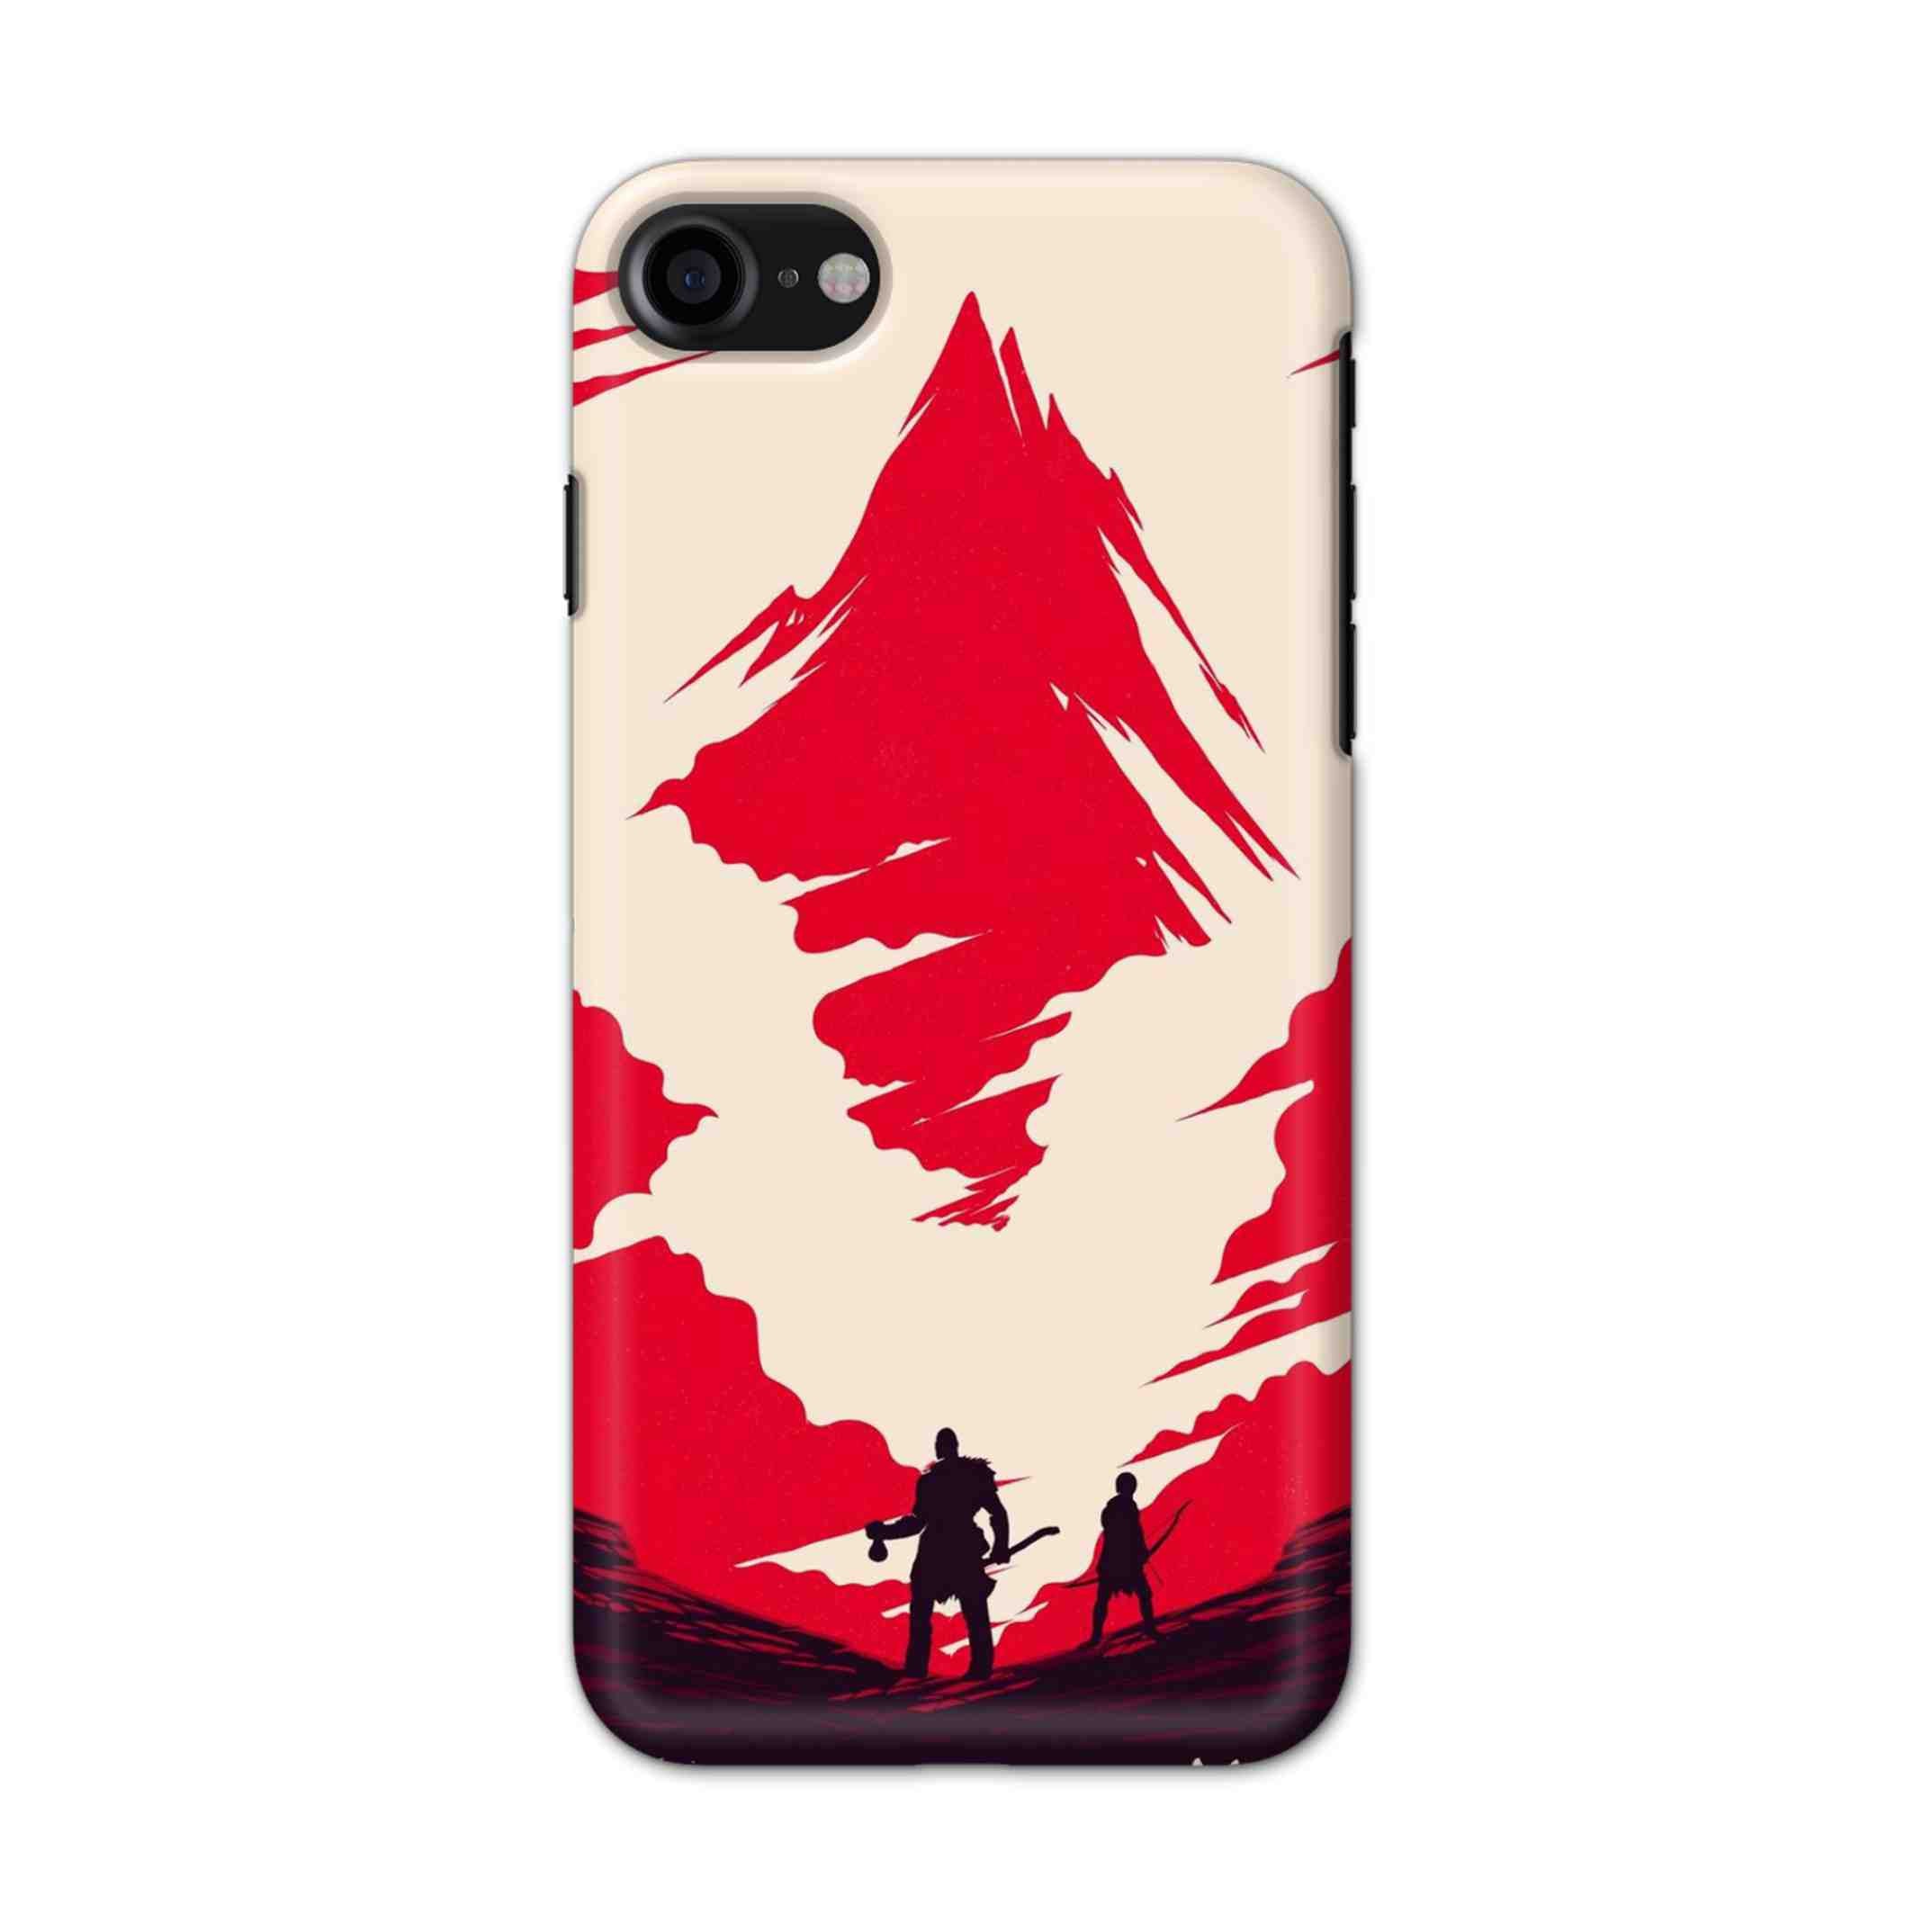 Buy God Of War Art Hard Back Mobile Phone Case/Cover For iPhone 7 / 8 Online